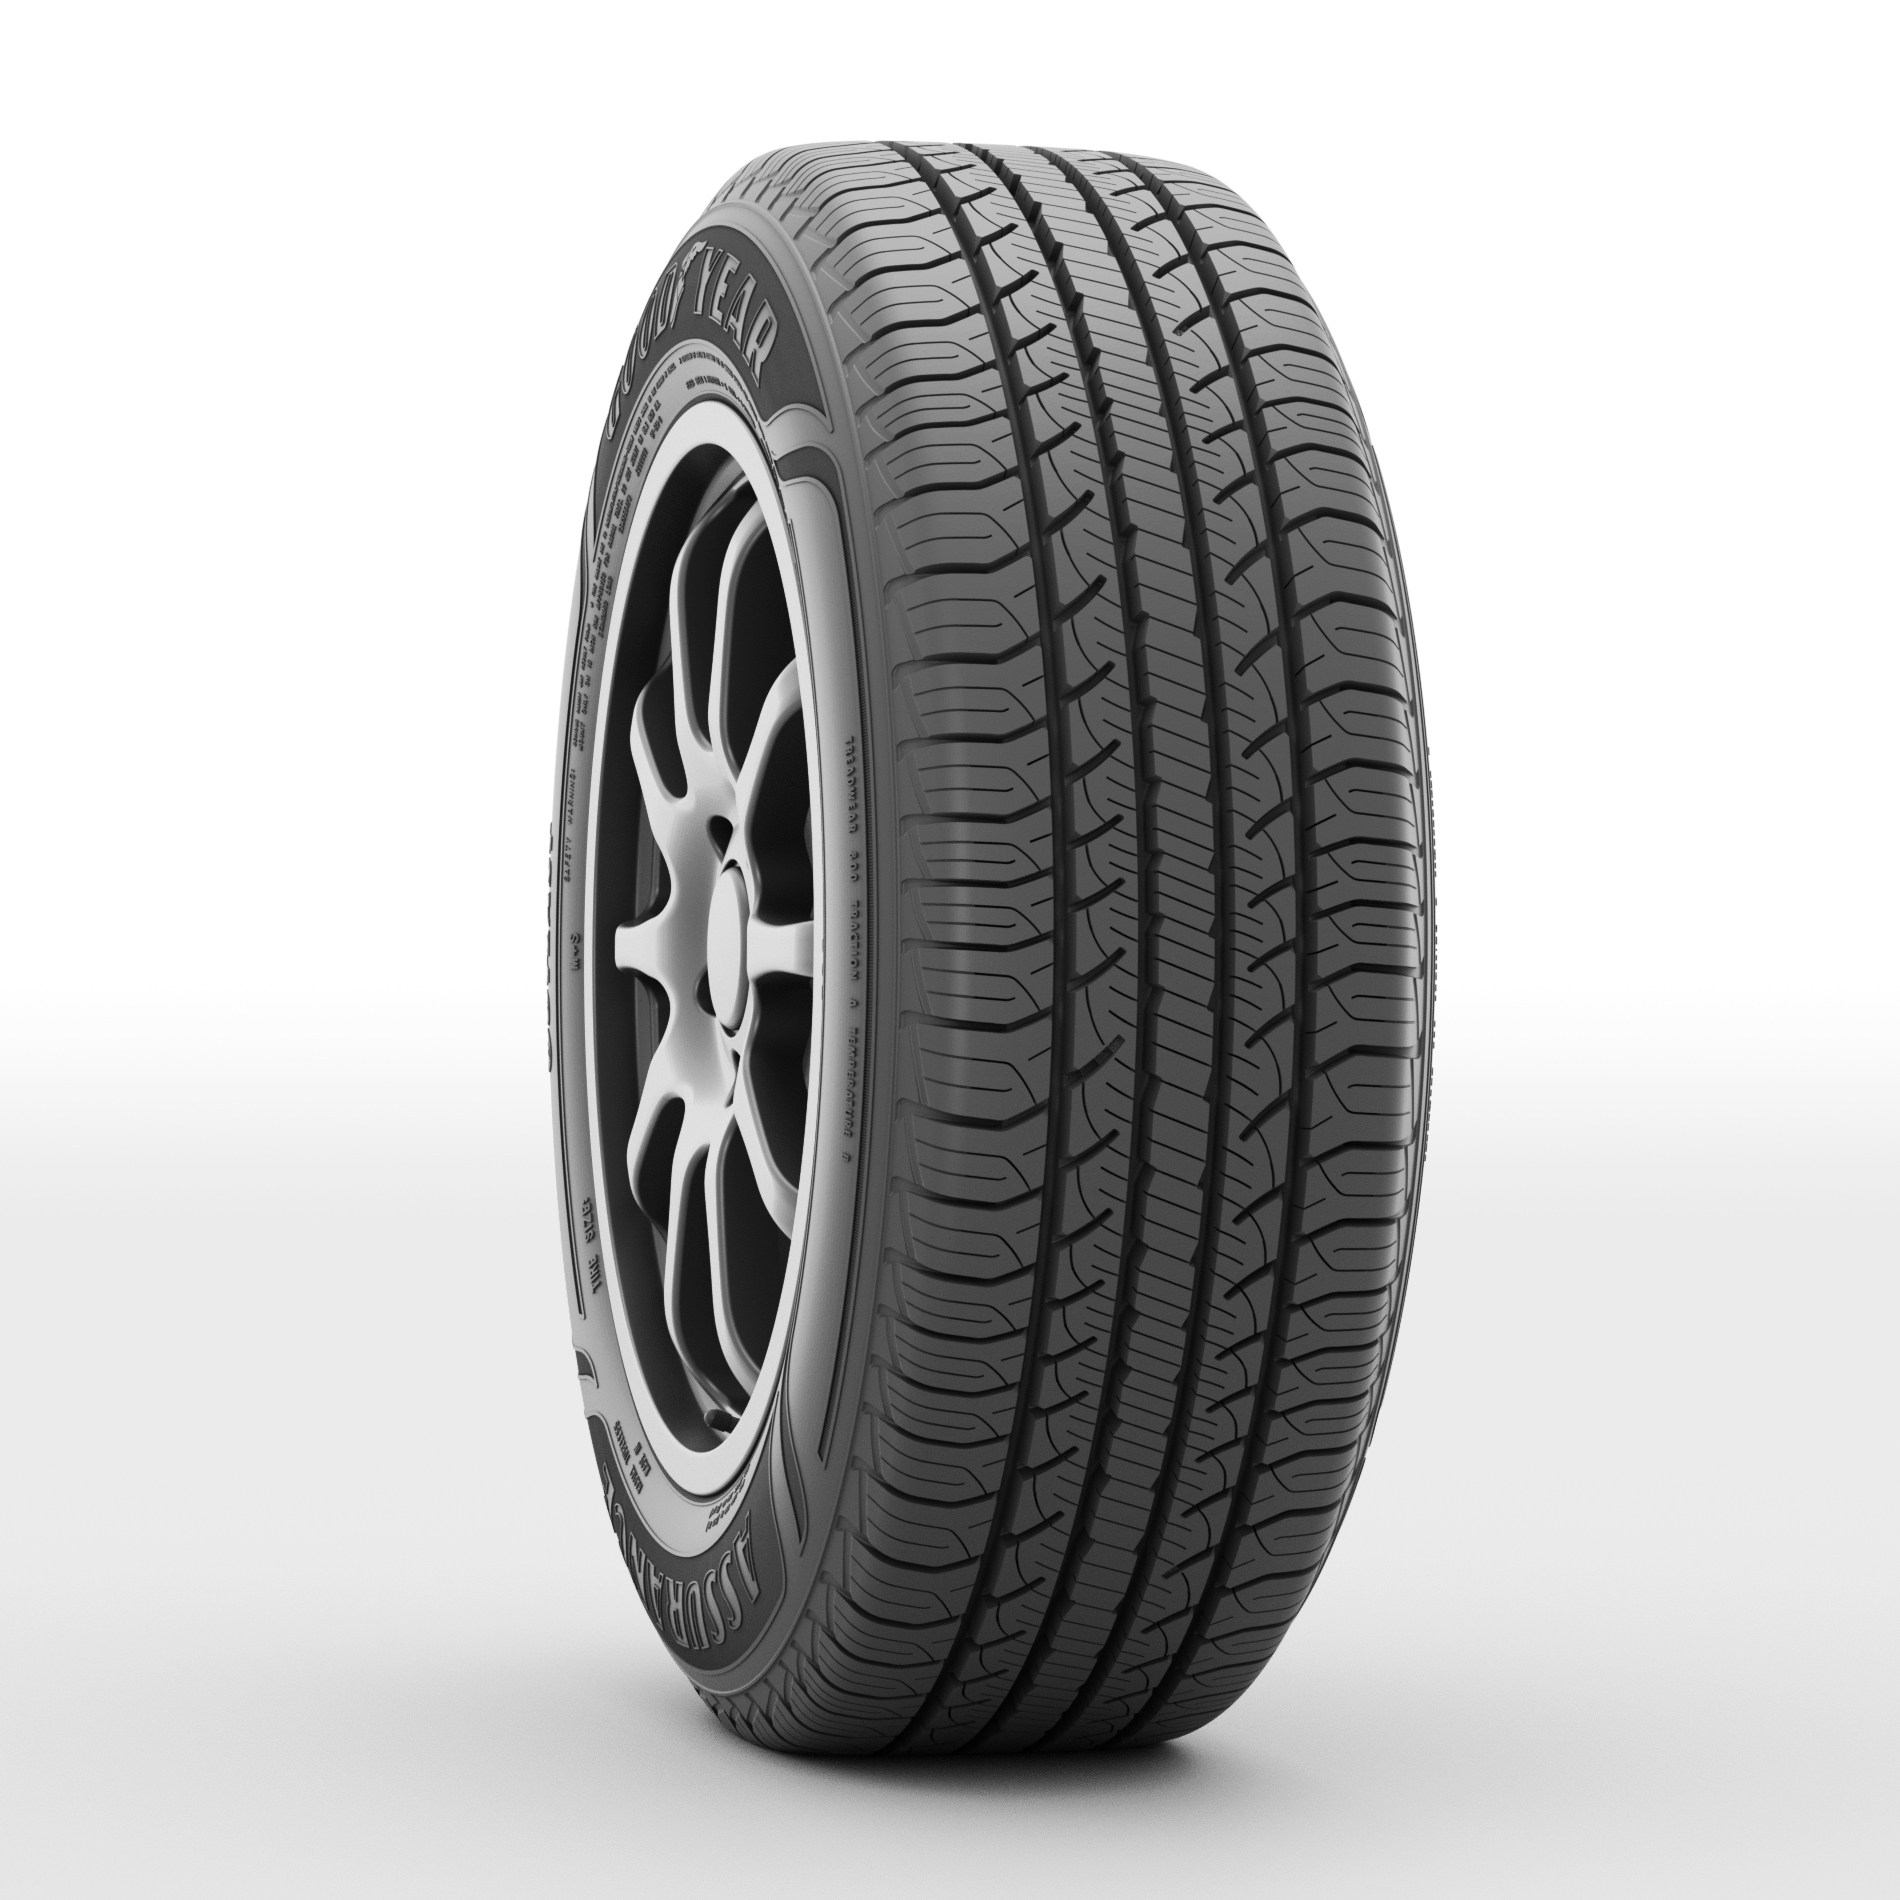 Goodyear Assurance Outlast 235/65R17 Tire 104H All-Season